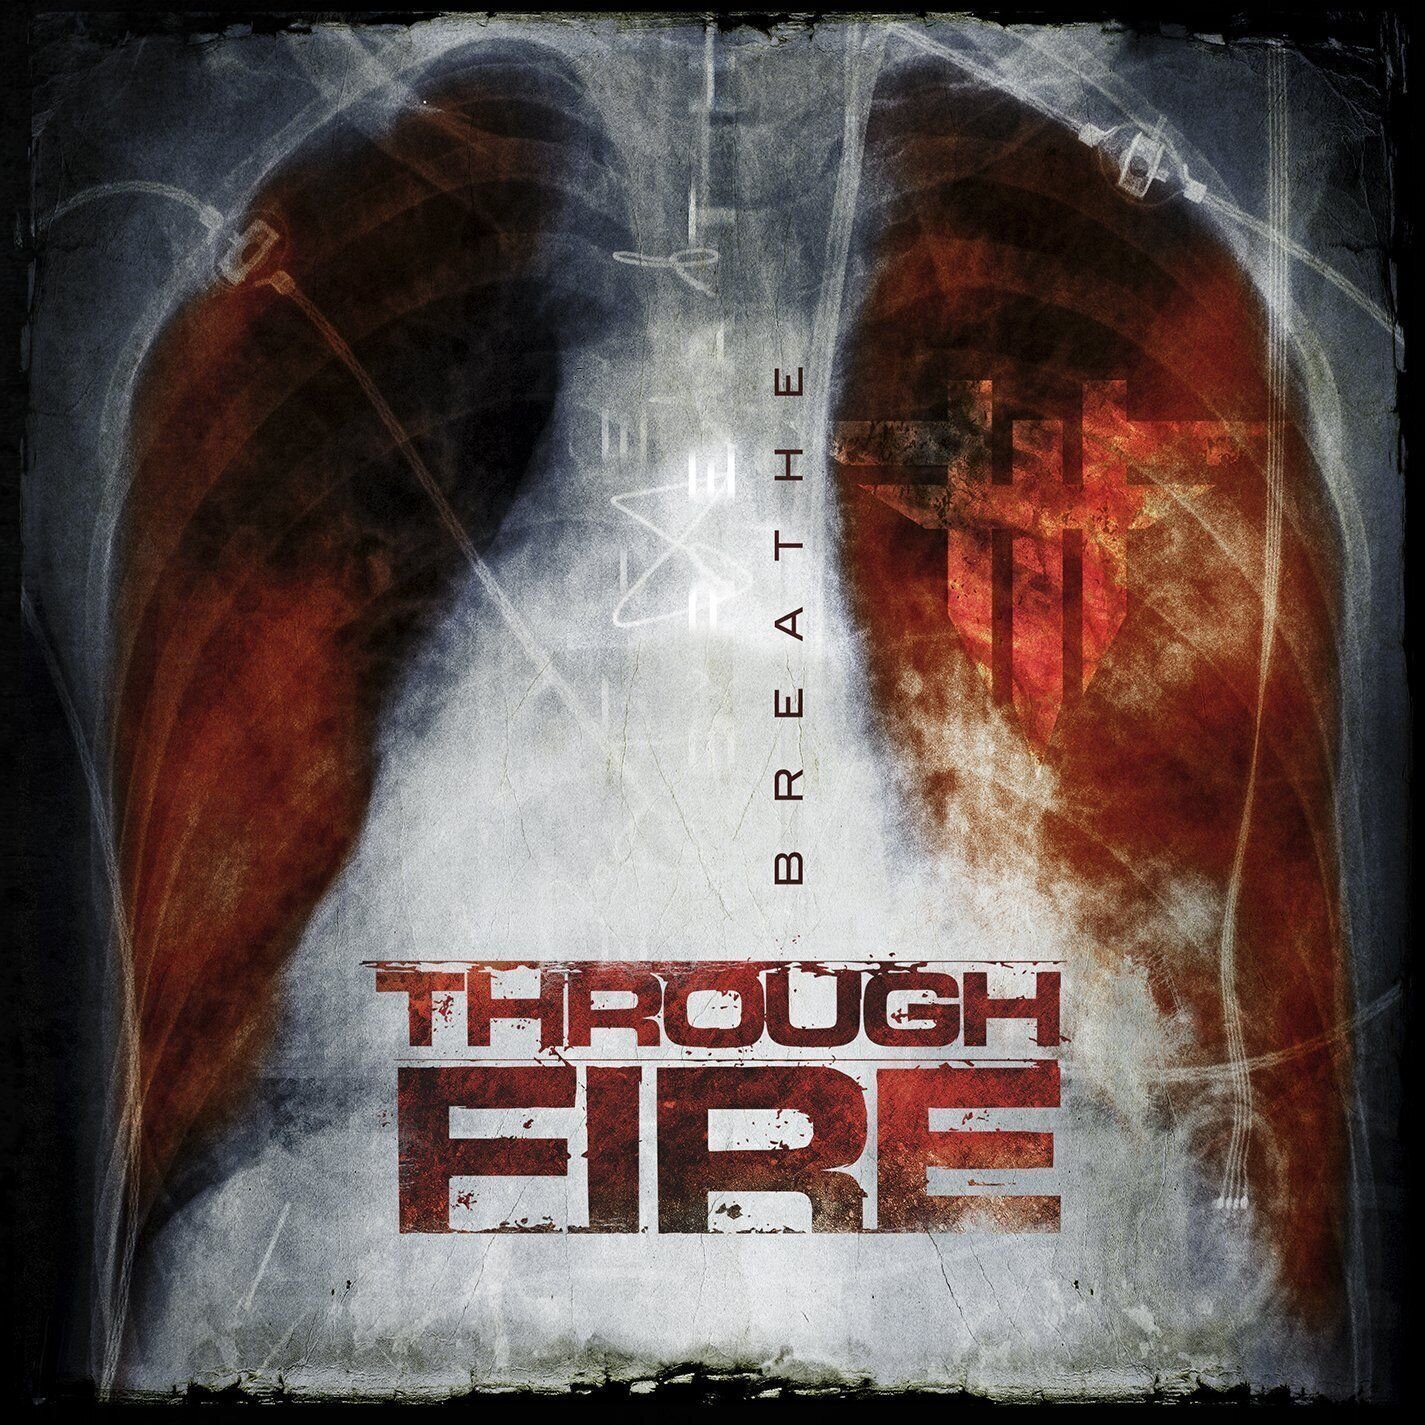 Through Fire - Breathe (Solid White Coloured) (2 LP)